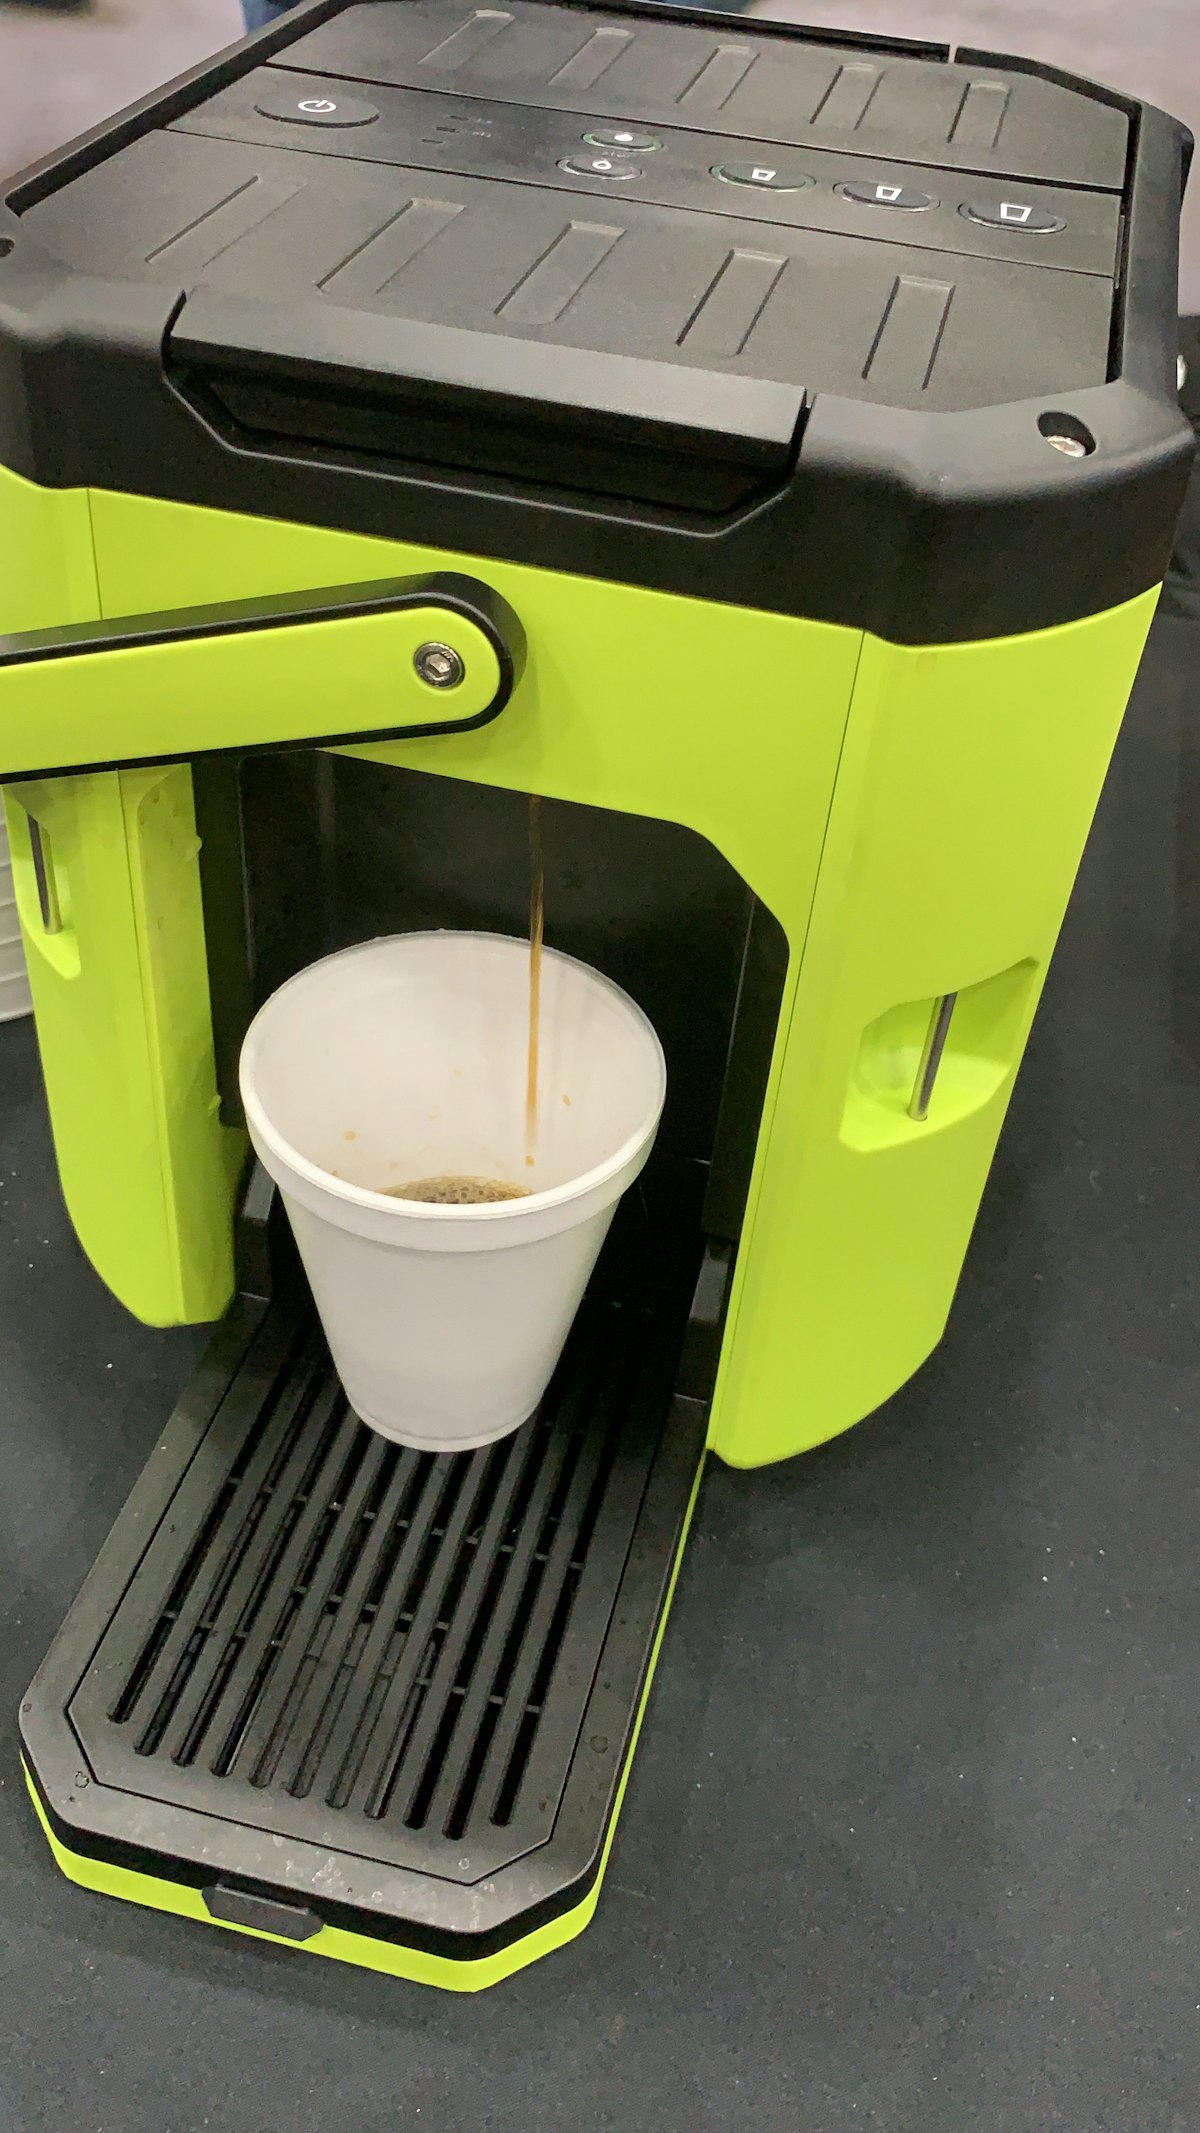 Jobsite Coffee Makers  Single-Cup Coffee Maker